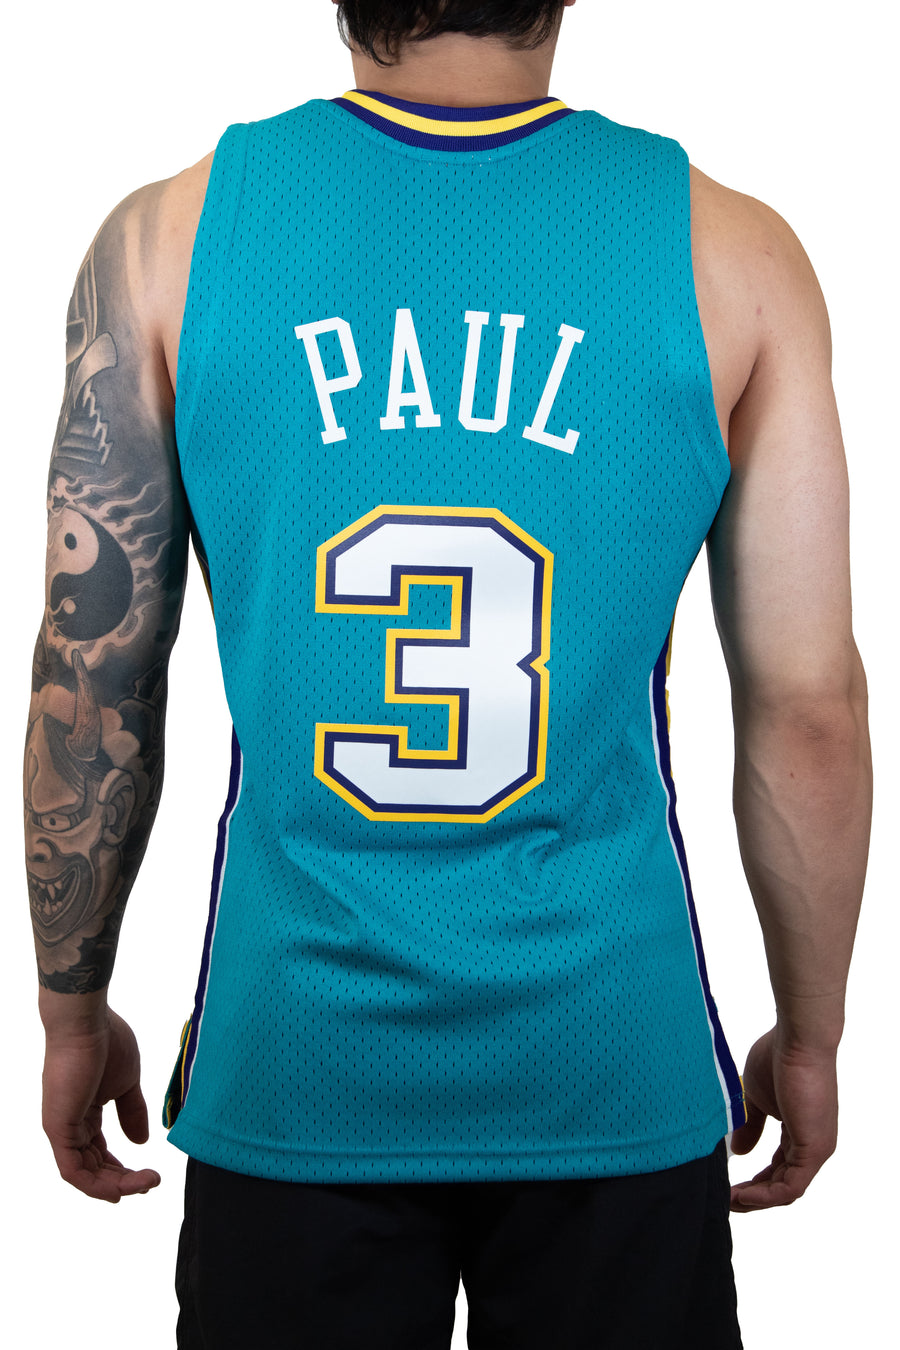 Mitchell & Ness NBA New Orleans Hornets Jersey (Chris Paul) - Teal